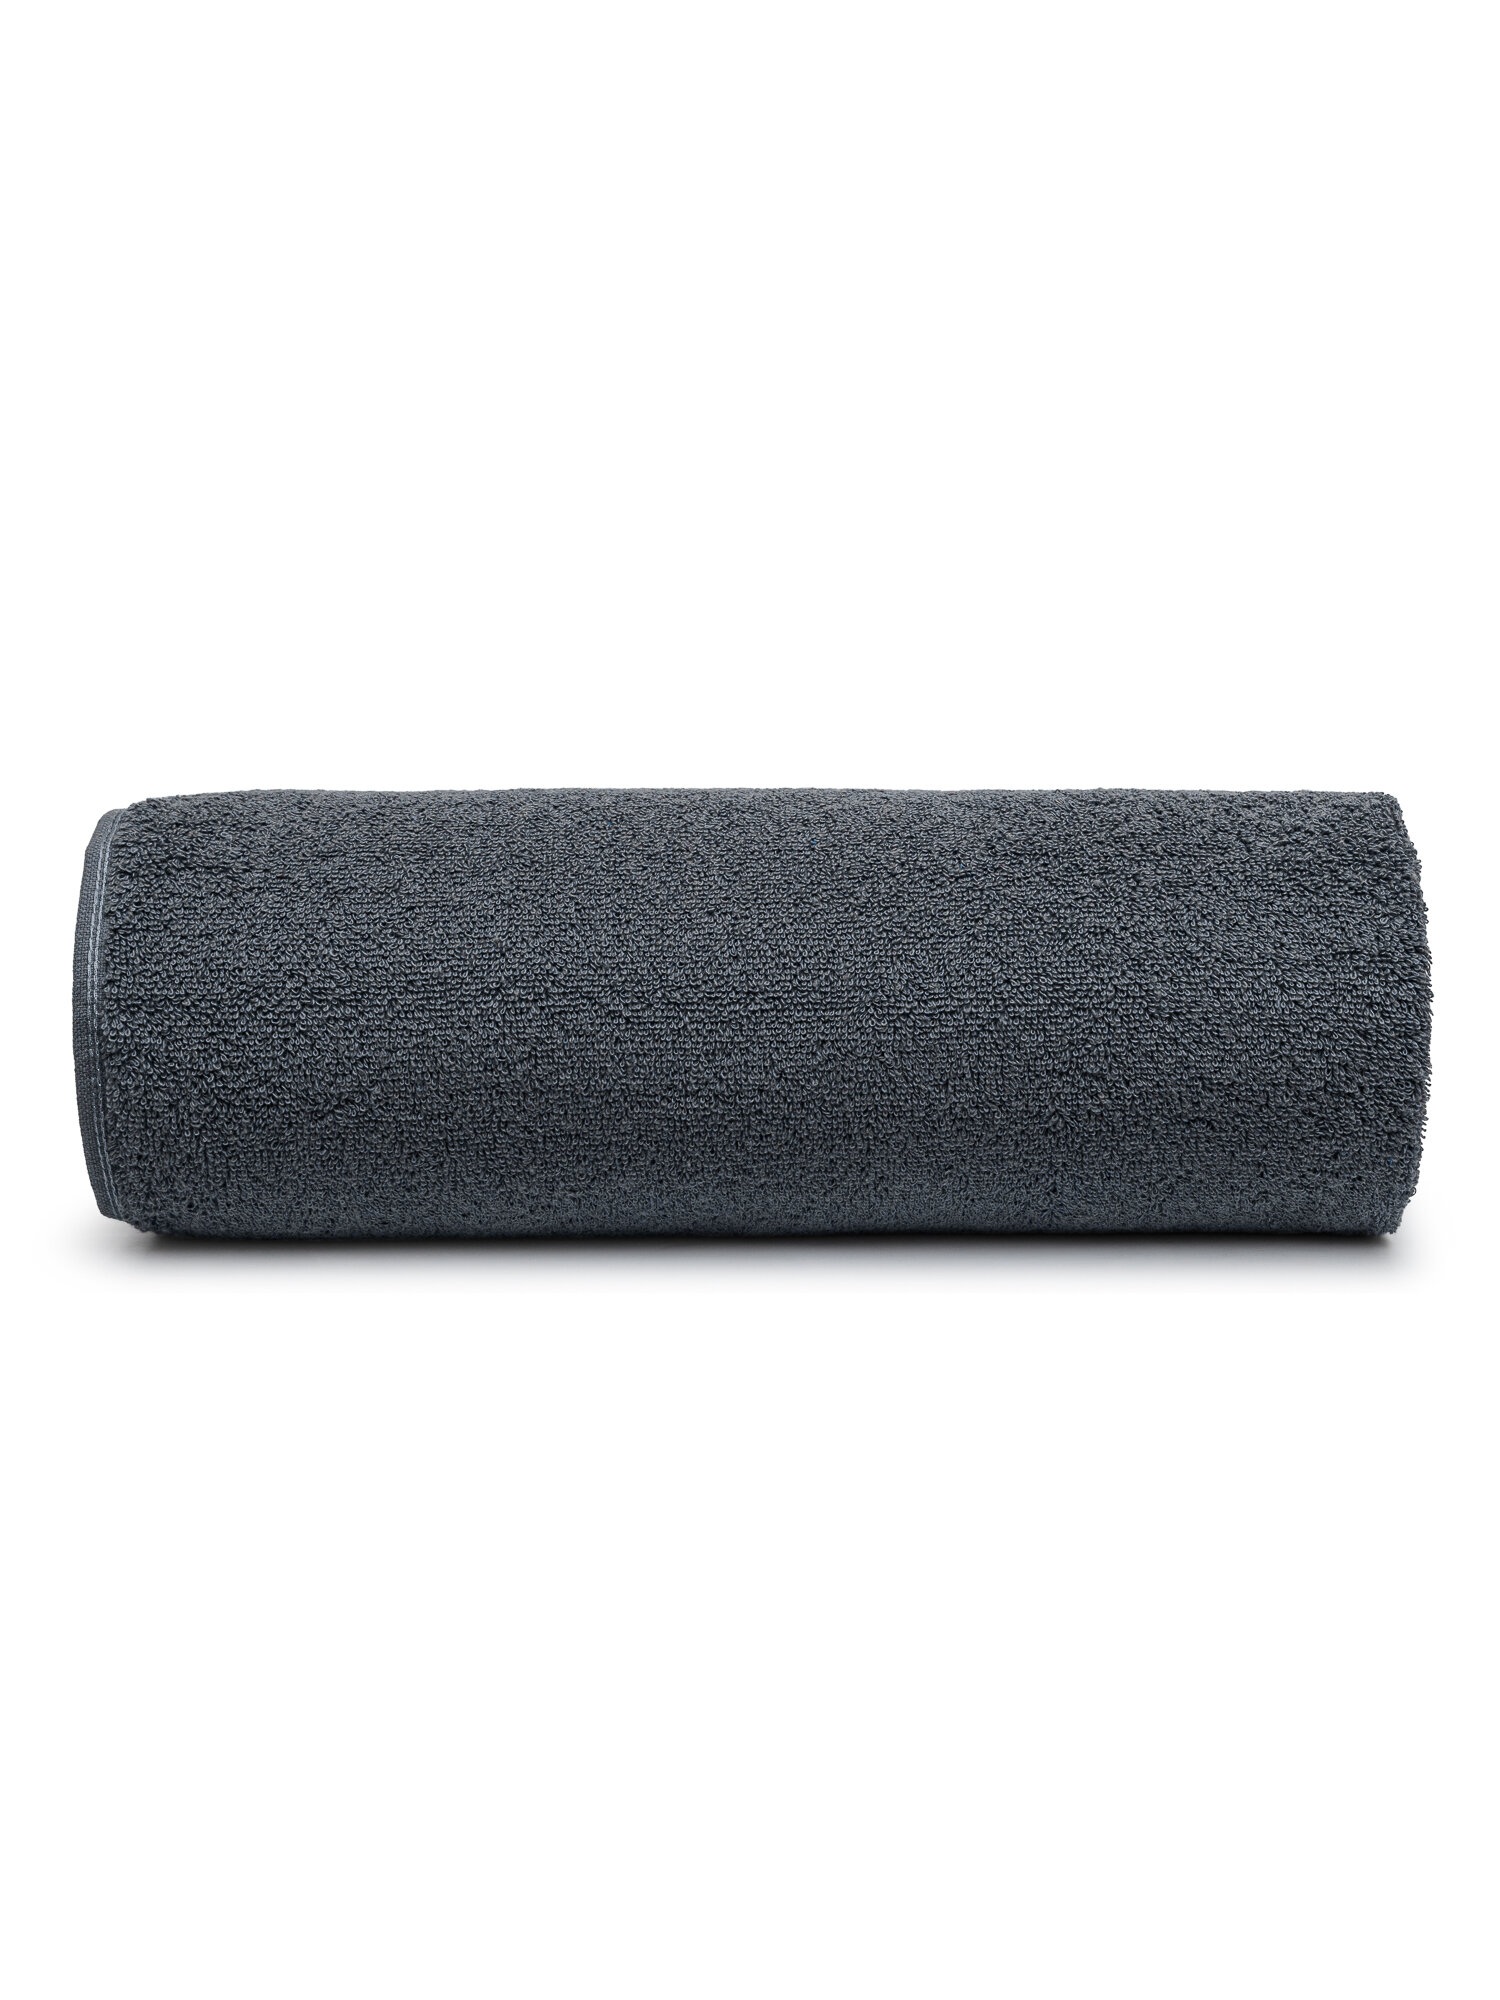 Махровое полотенце 50х100 банное TCStyle серого цвета 1 шт. 470 гр/м2 - фотография № 3